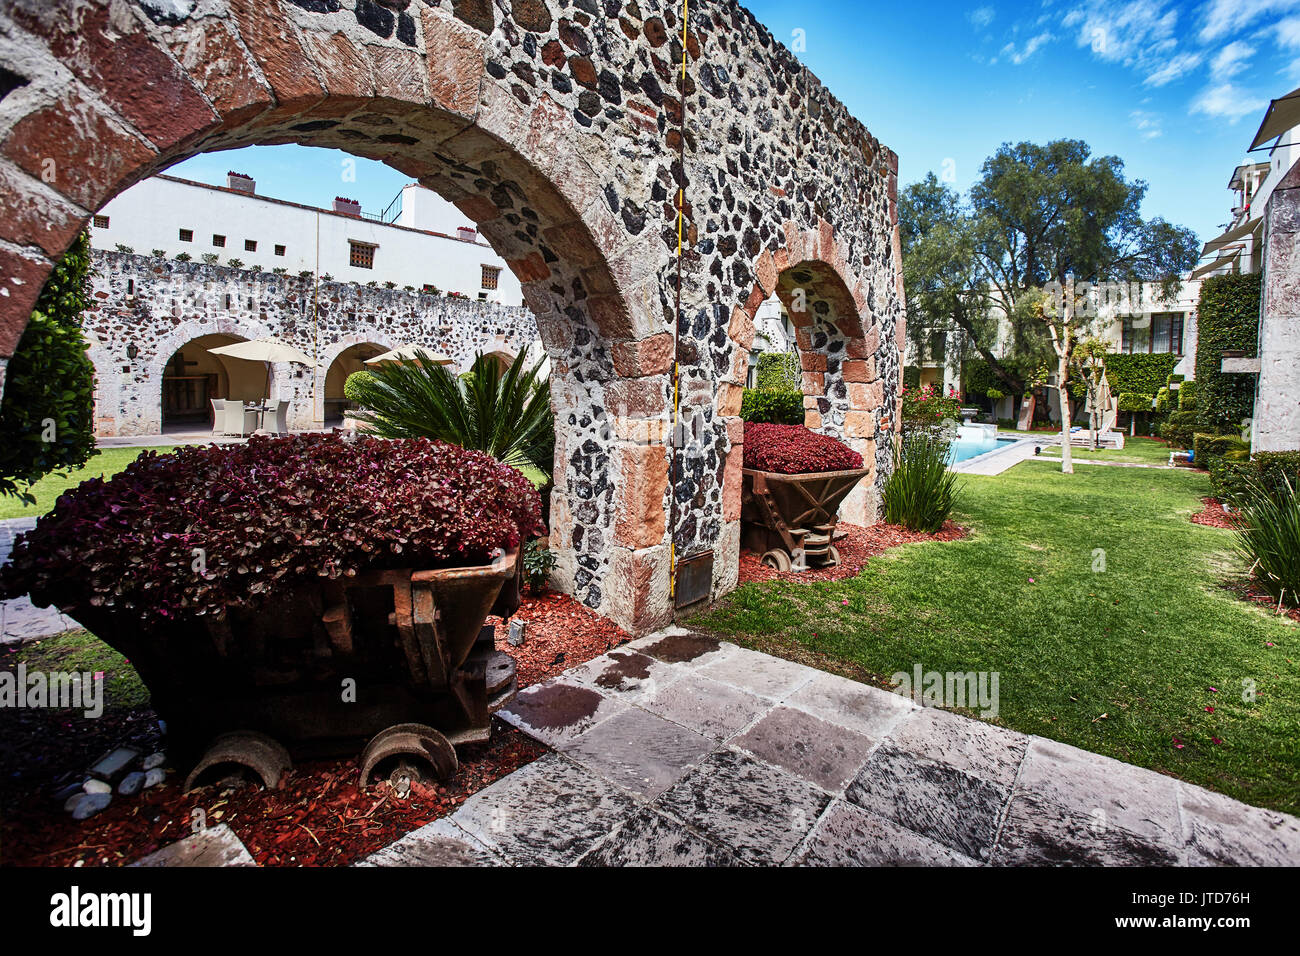 Amérique; Mexique; Querétaro; ville de Querétaro; aqueduc dans le jardin de l'hôtel Doña Urraca Banque D'Images